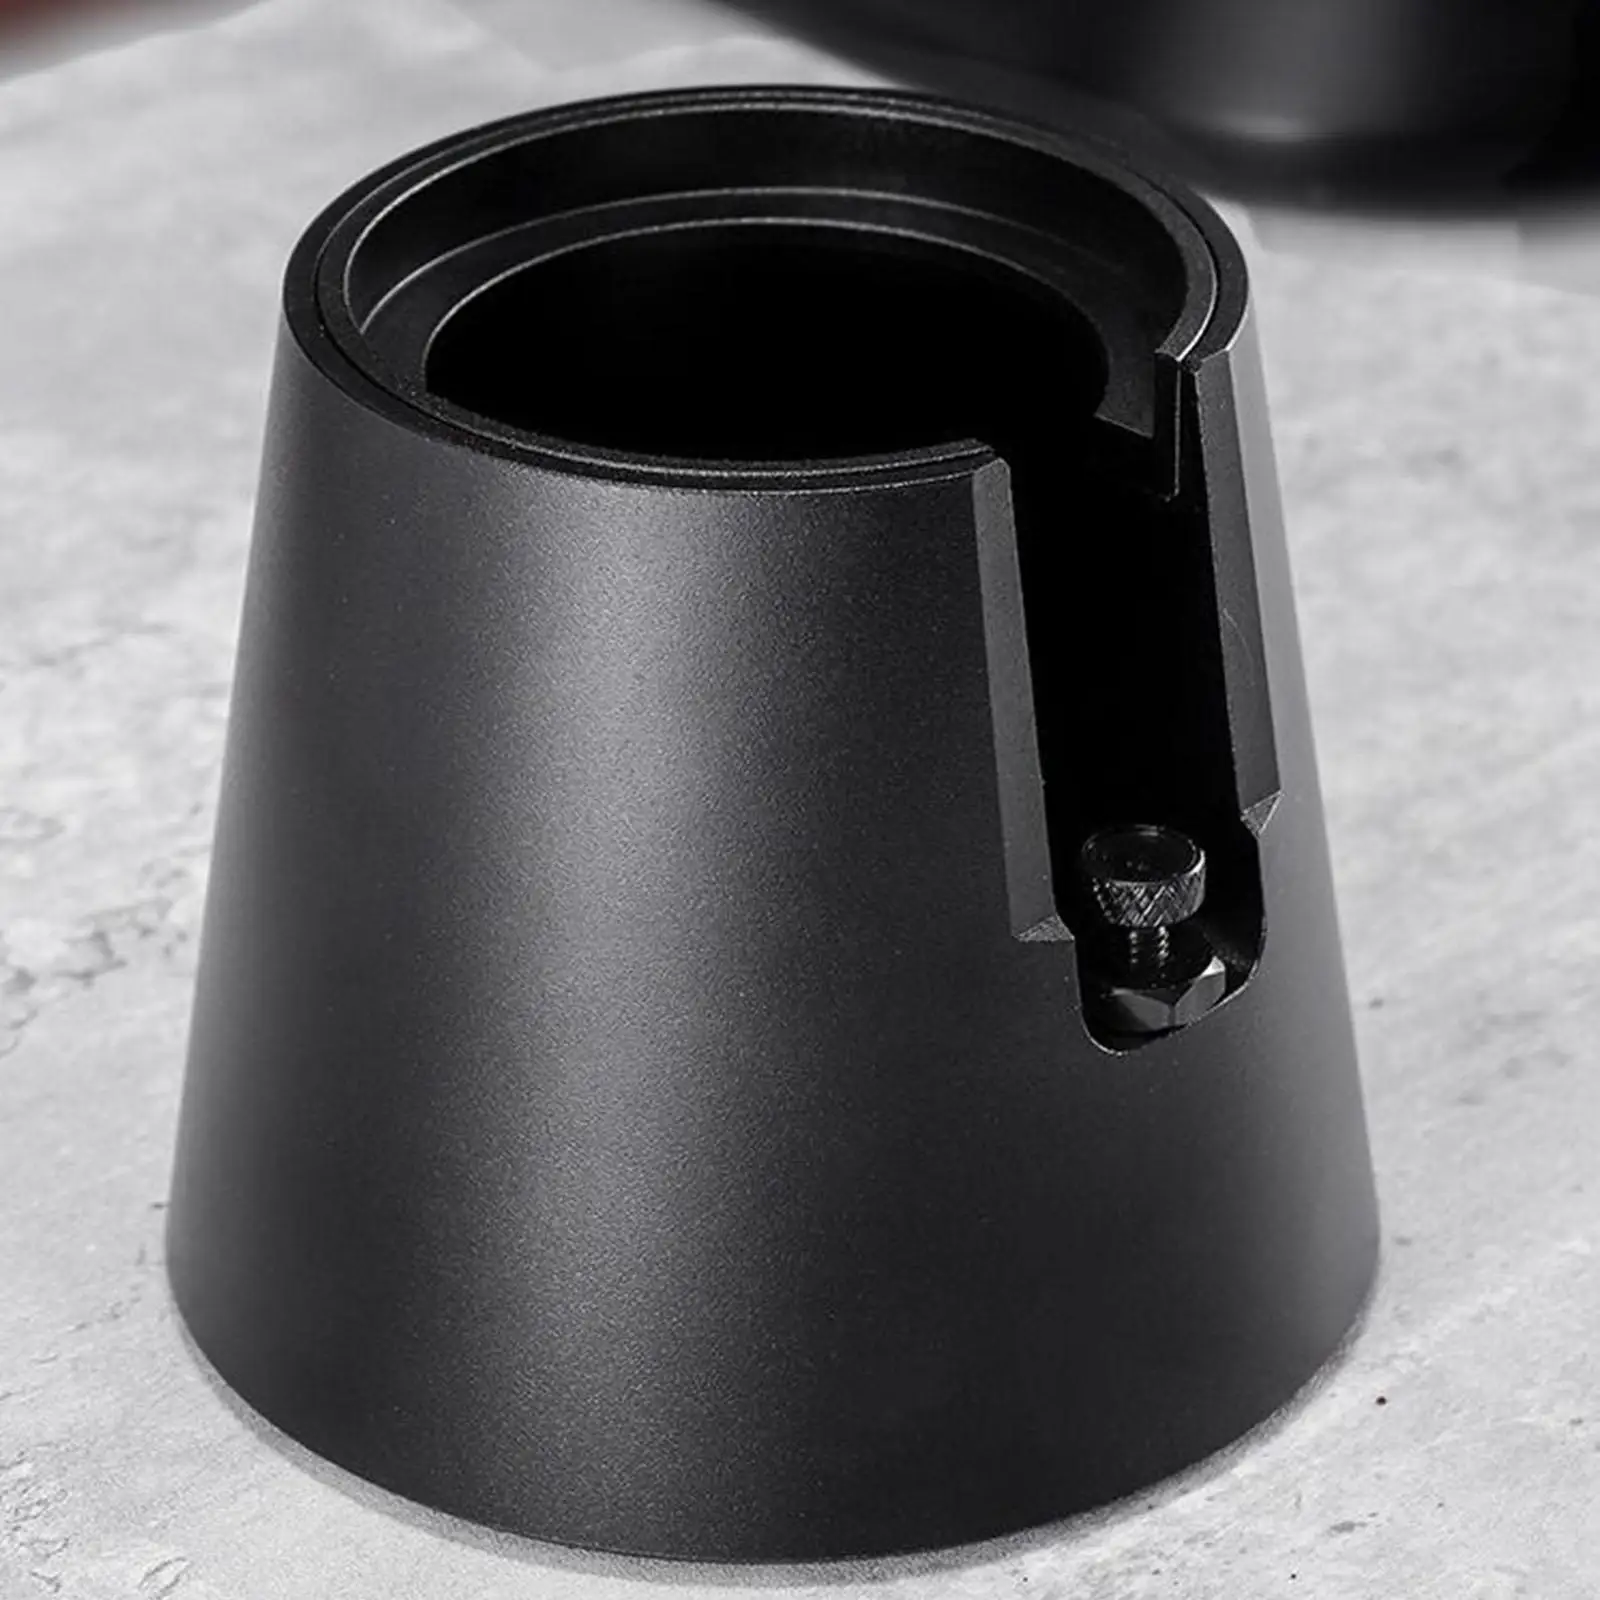 51mm 53mm 58mm Espresso Tamper Stand Coffee Portafilter Holder Espresso Tamp stand barista Tools Espresso Accessories